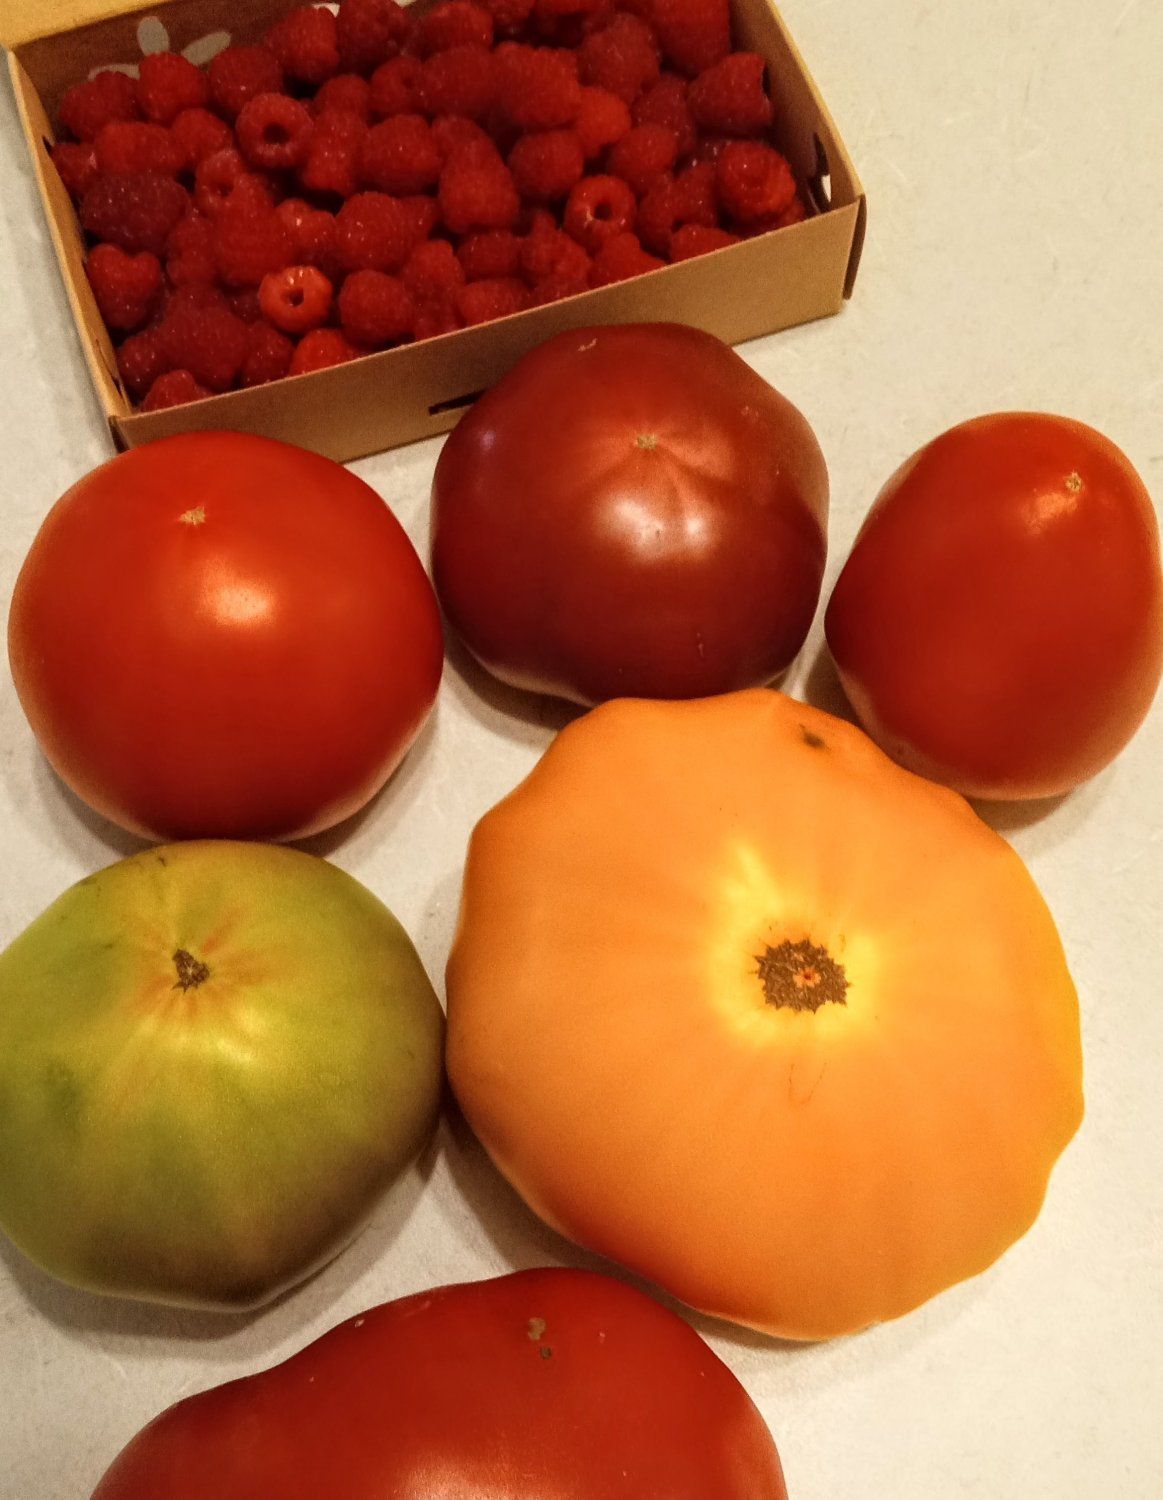 Next Happening: More Tomatoes, More Raspberries